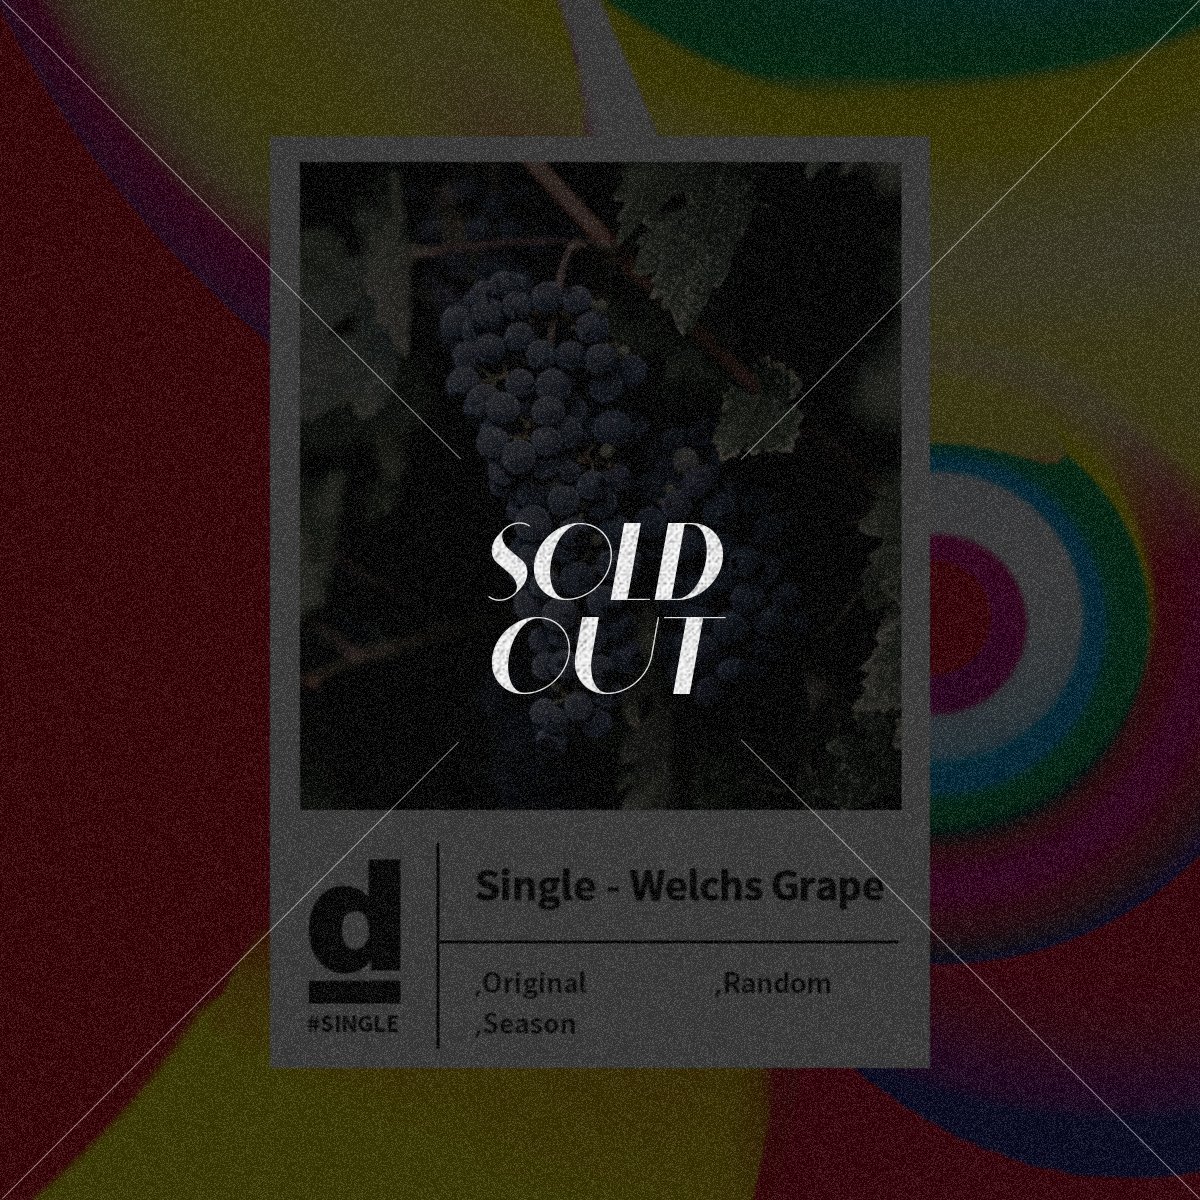 #Single Origin - Welchs Grape